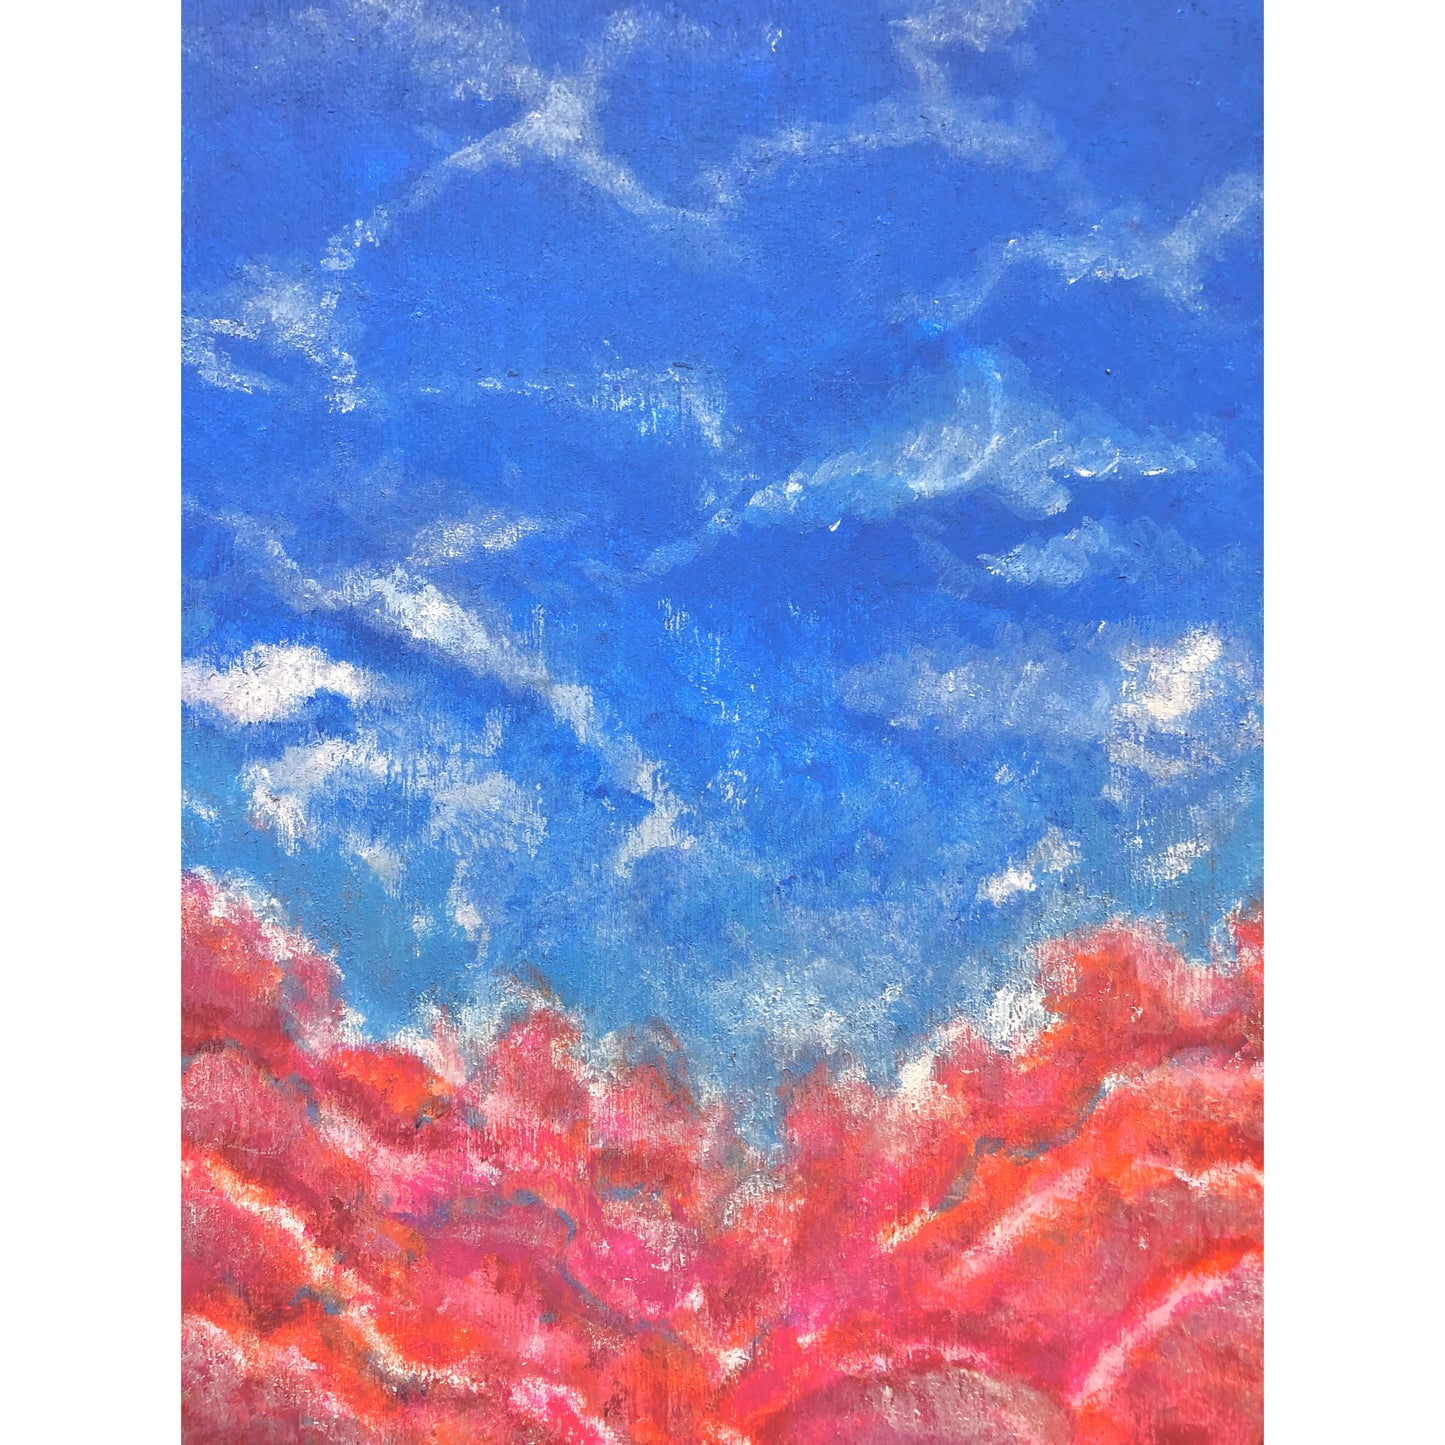 Cherub Sky by Sarah Ralston